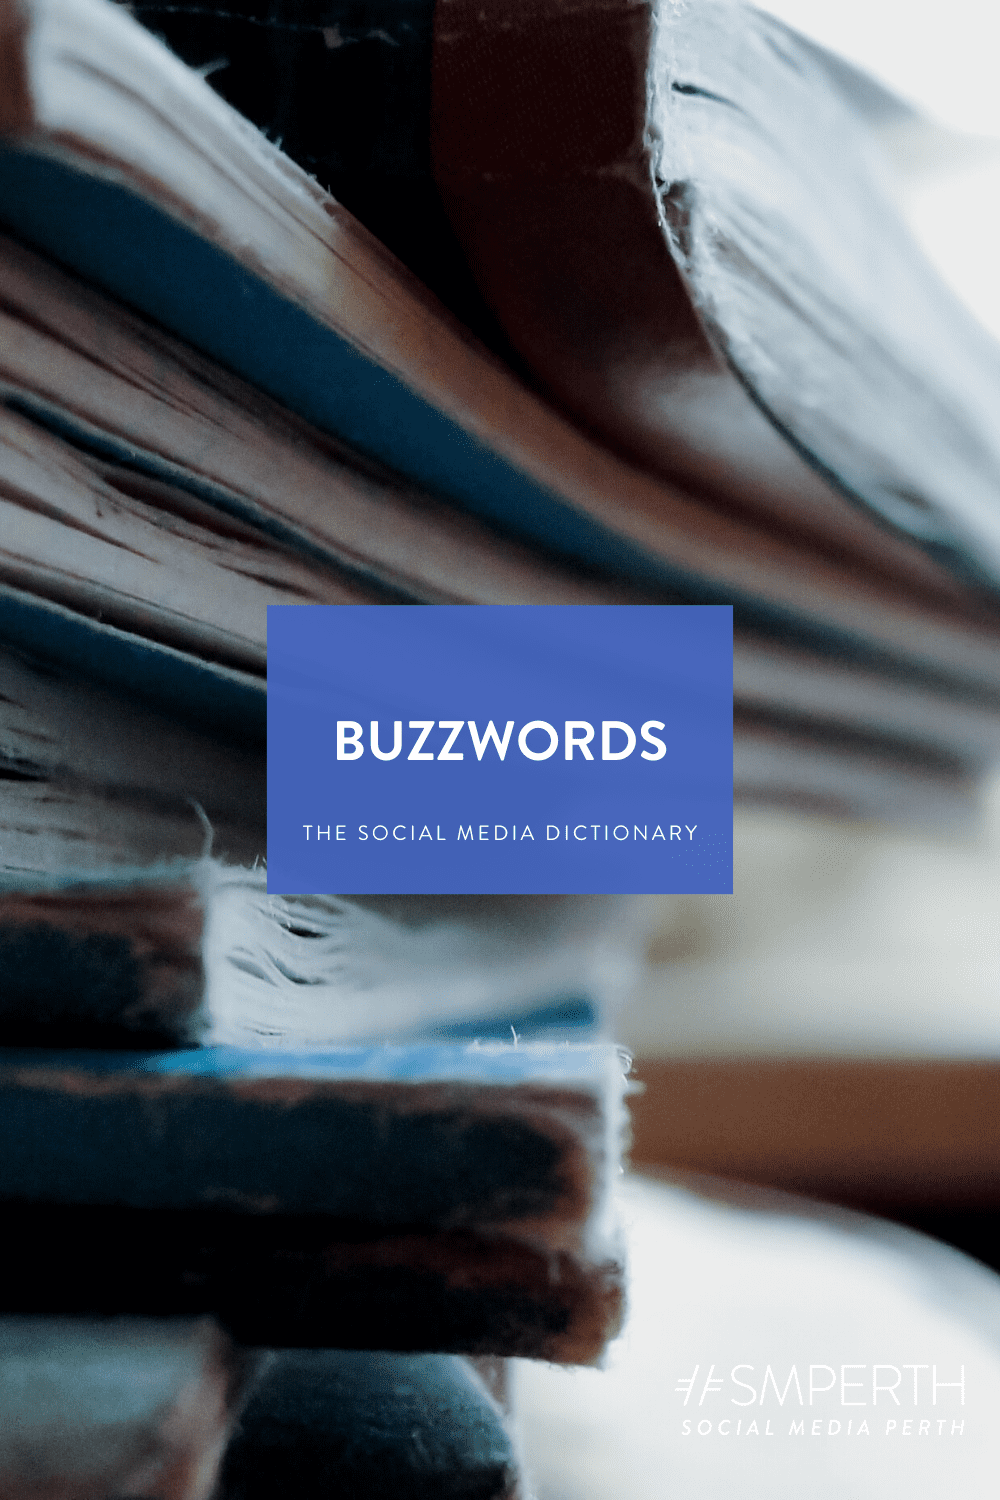 The Social Media Dictionary: The Buzzword Edition